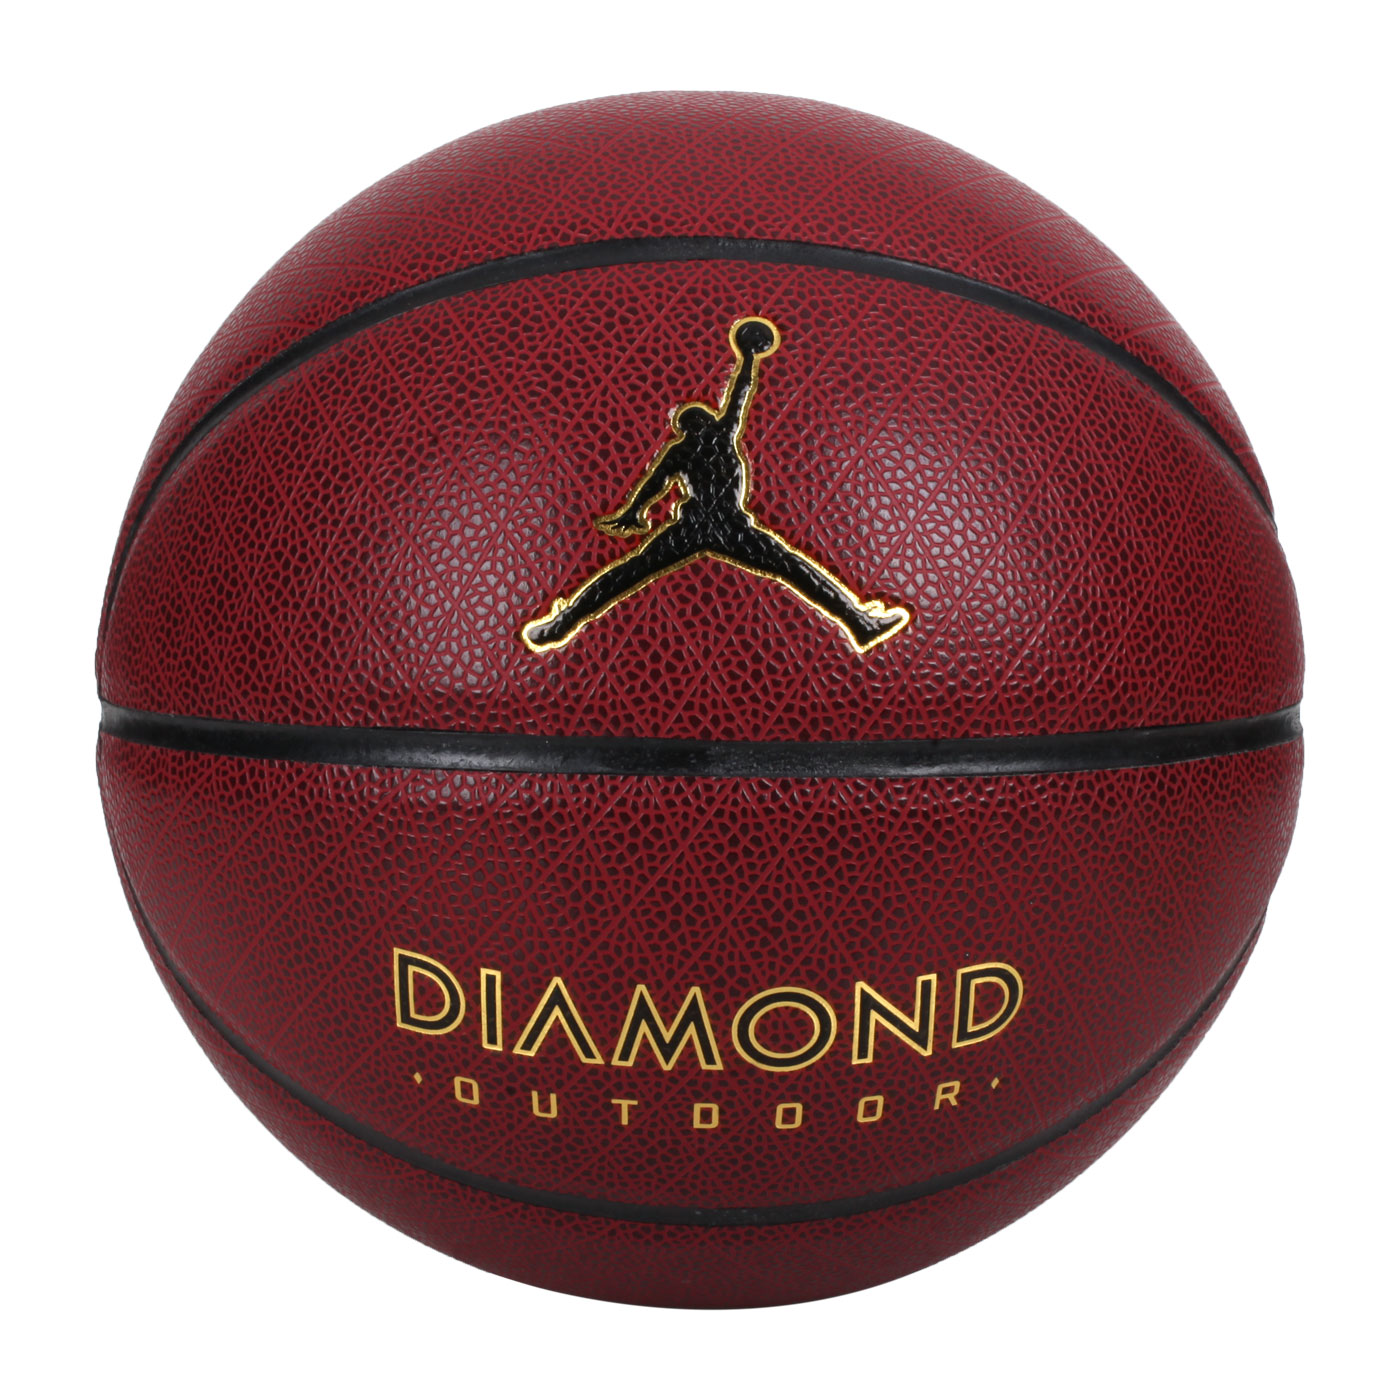 NIKE JORDAN DIAMOND OUTDOOR 8P 7號籃球 J100825289107